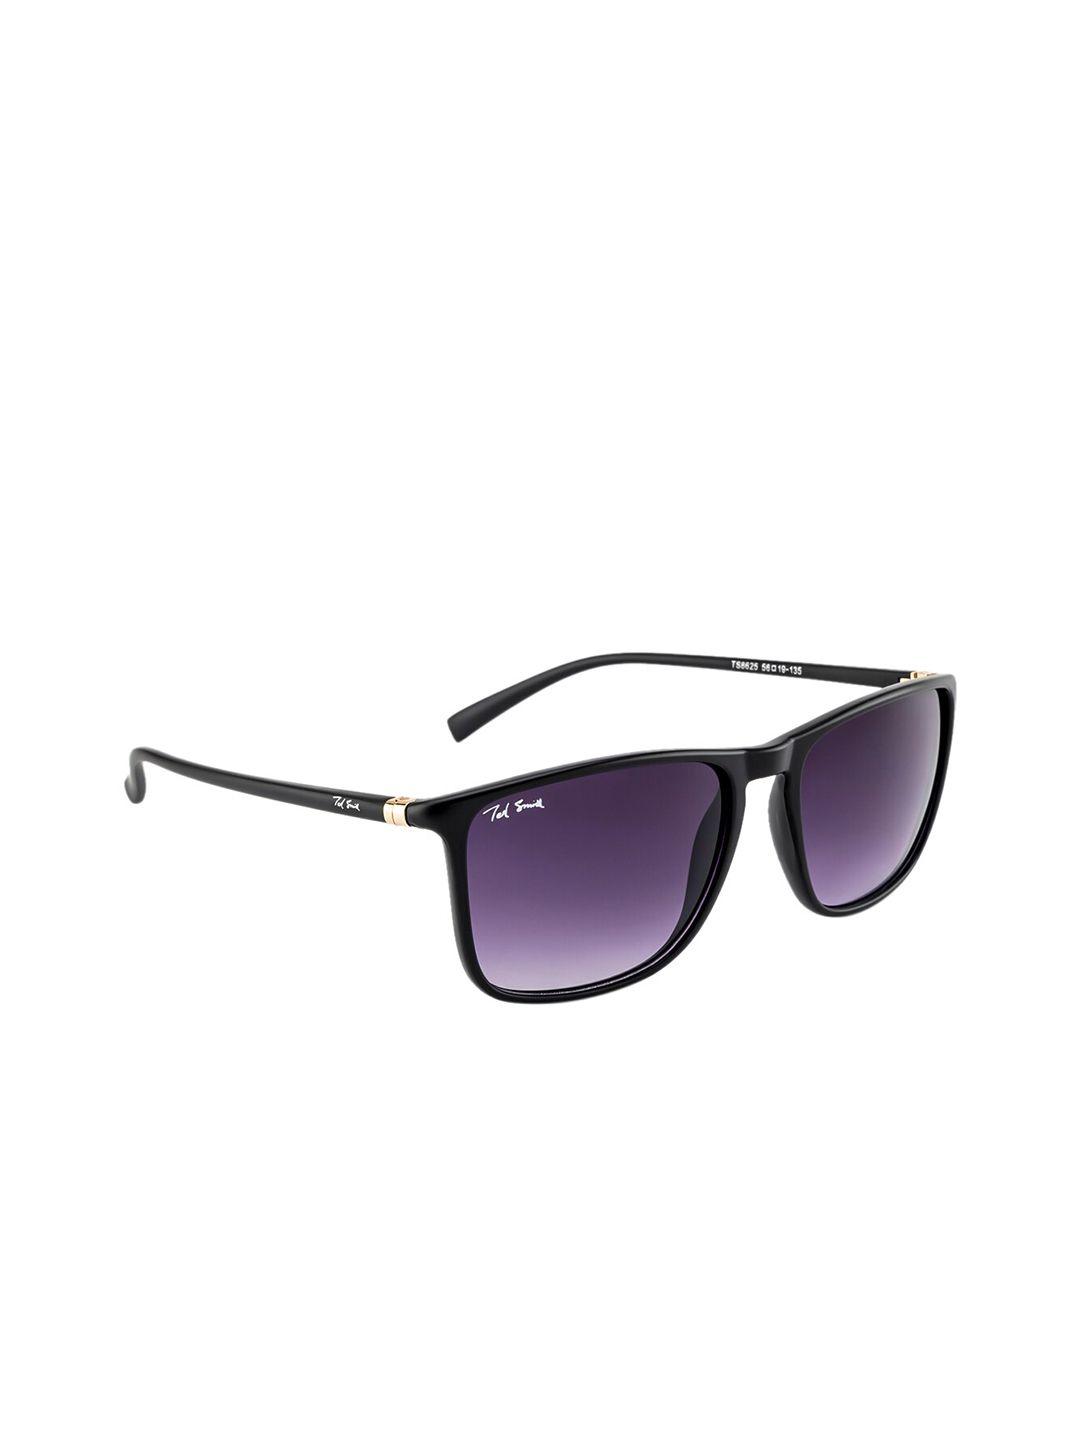 ted smith unisex purple lens & black wayfarer sunglasses auli_c4-purple